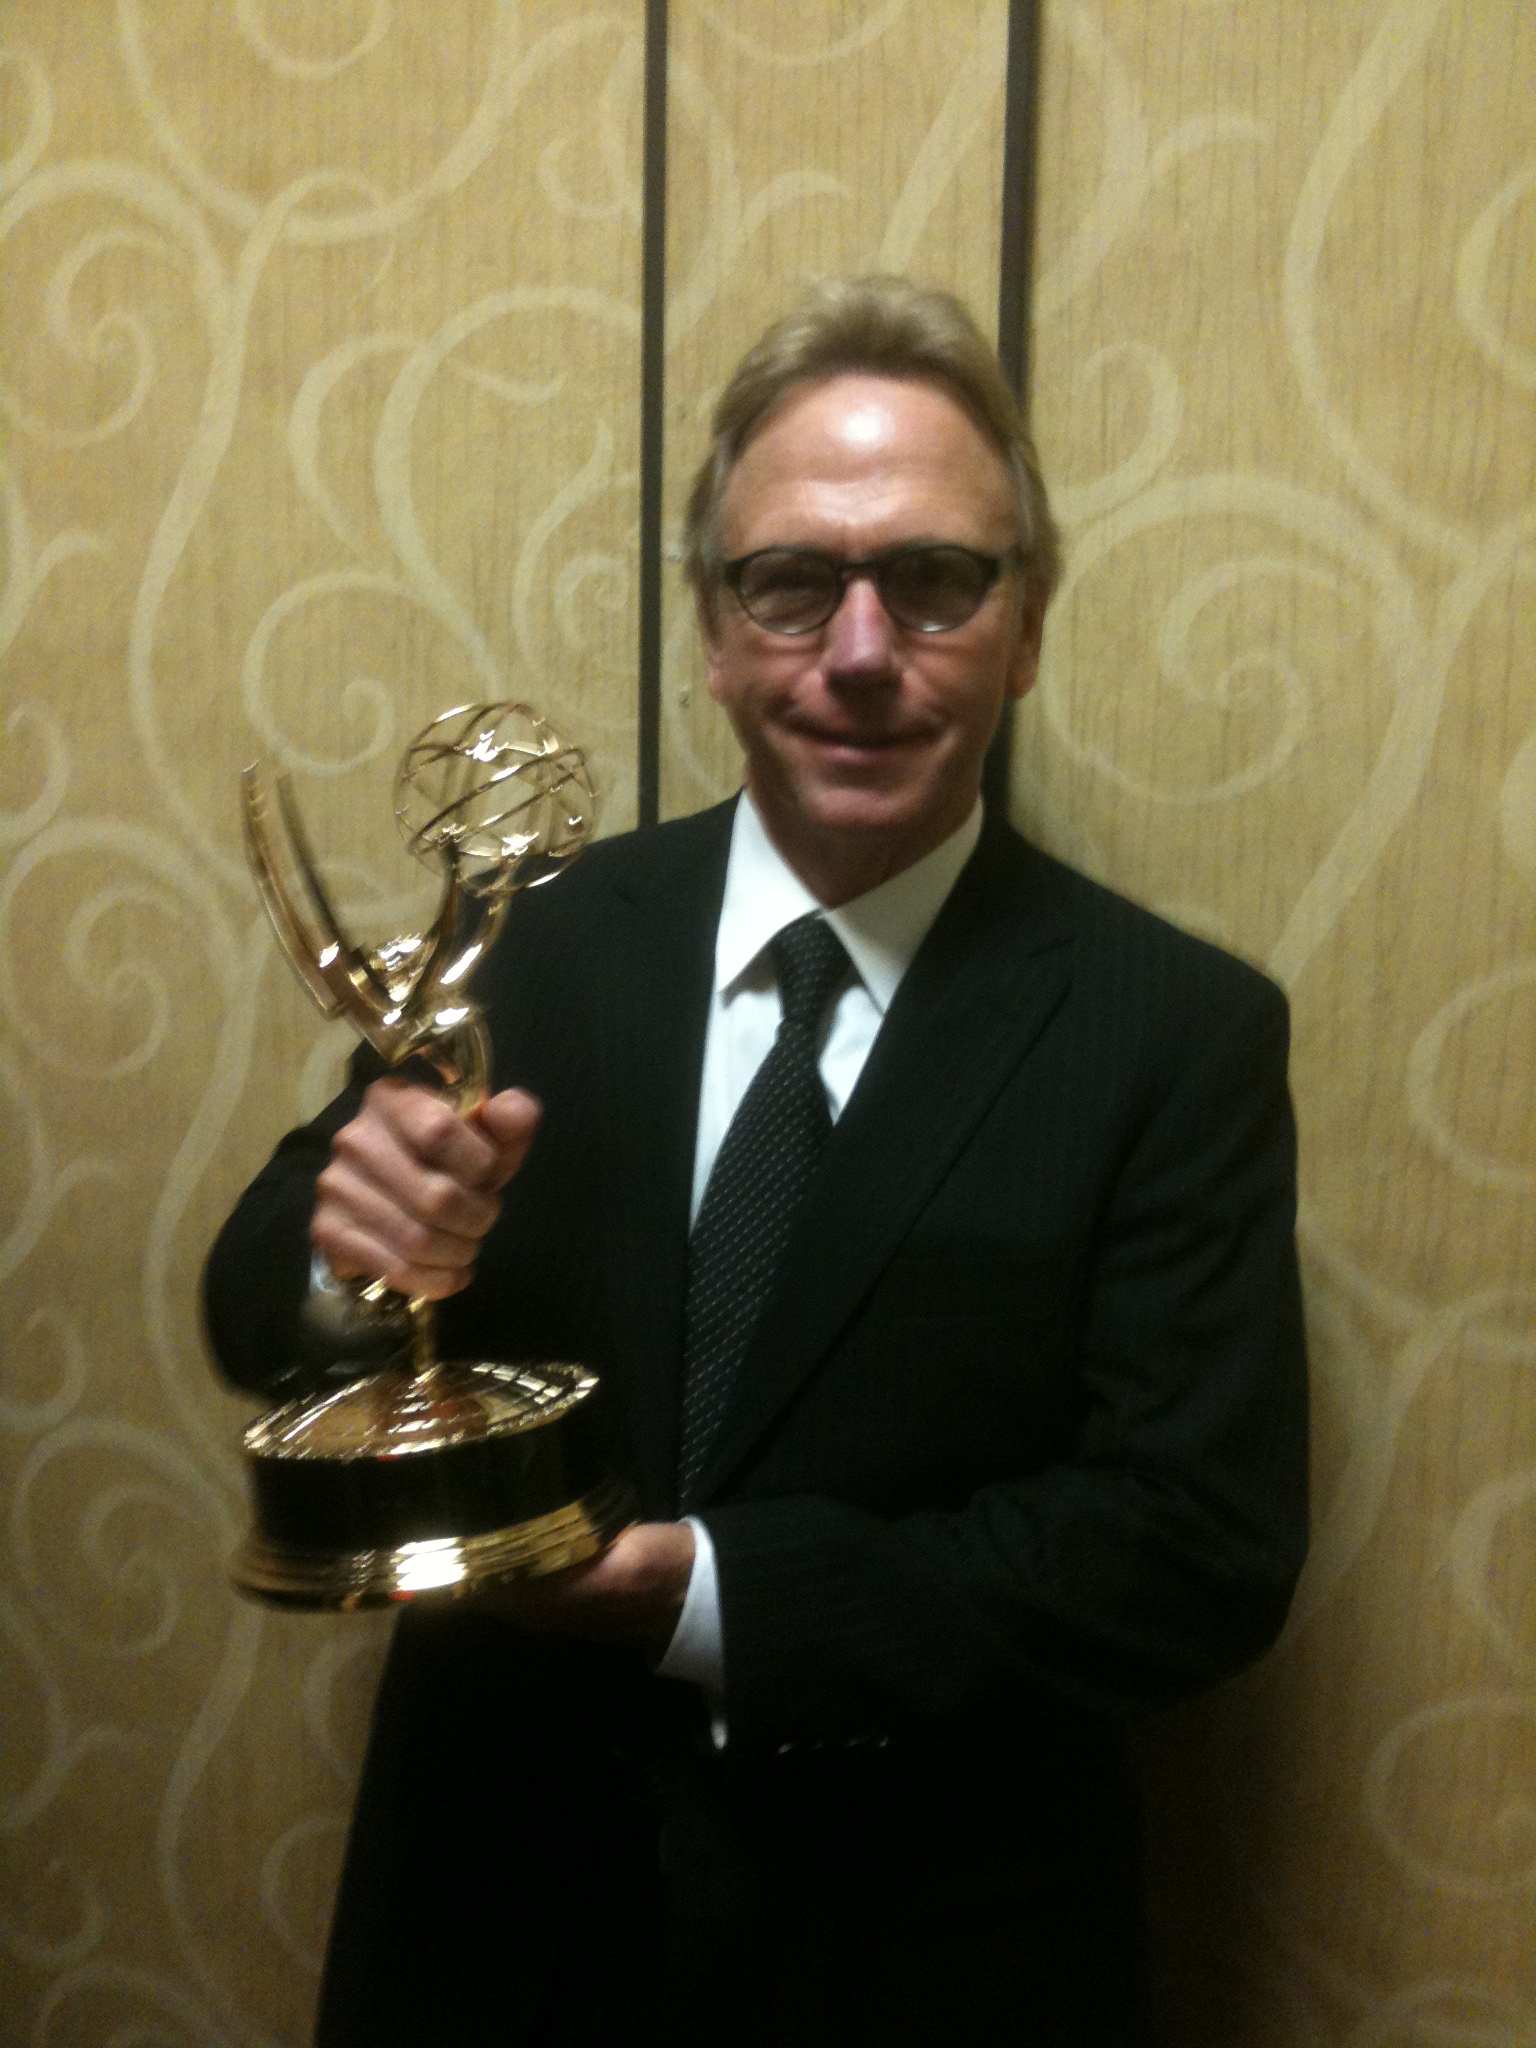 Daytime Emmy Awards 2011 Pat's Lifetime Achievement Award